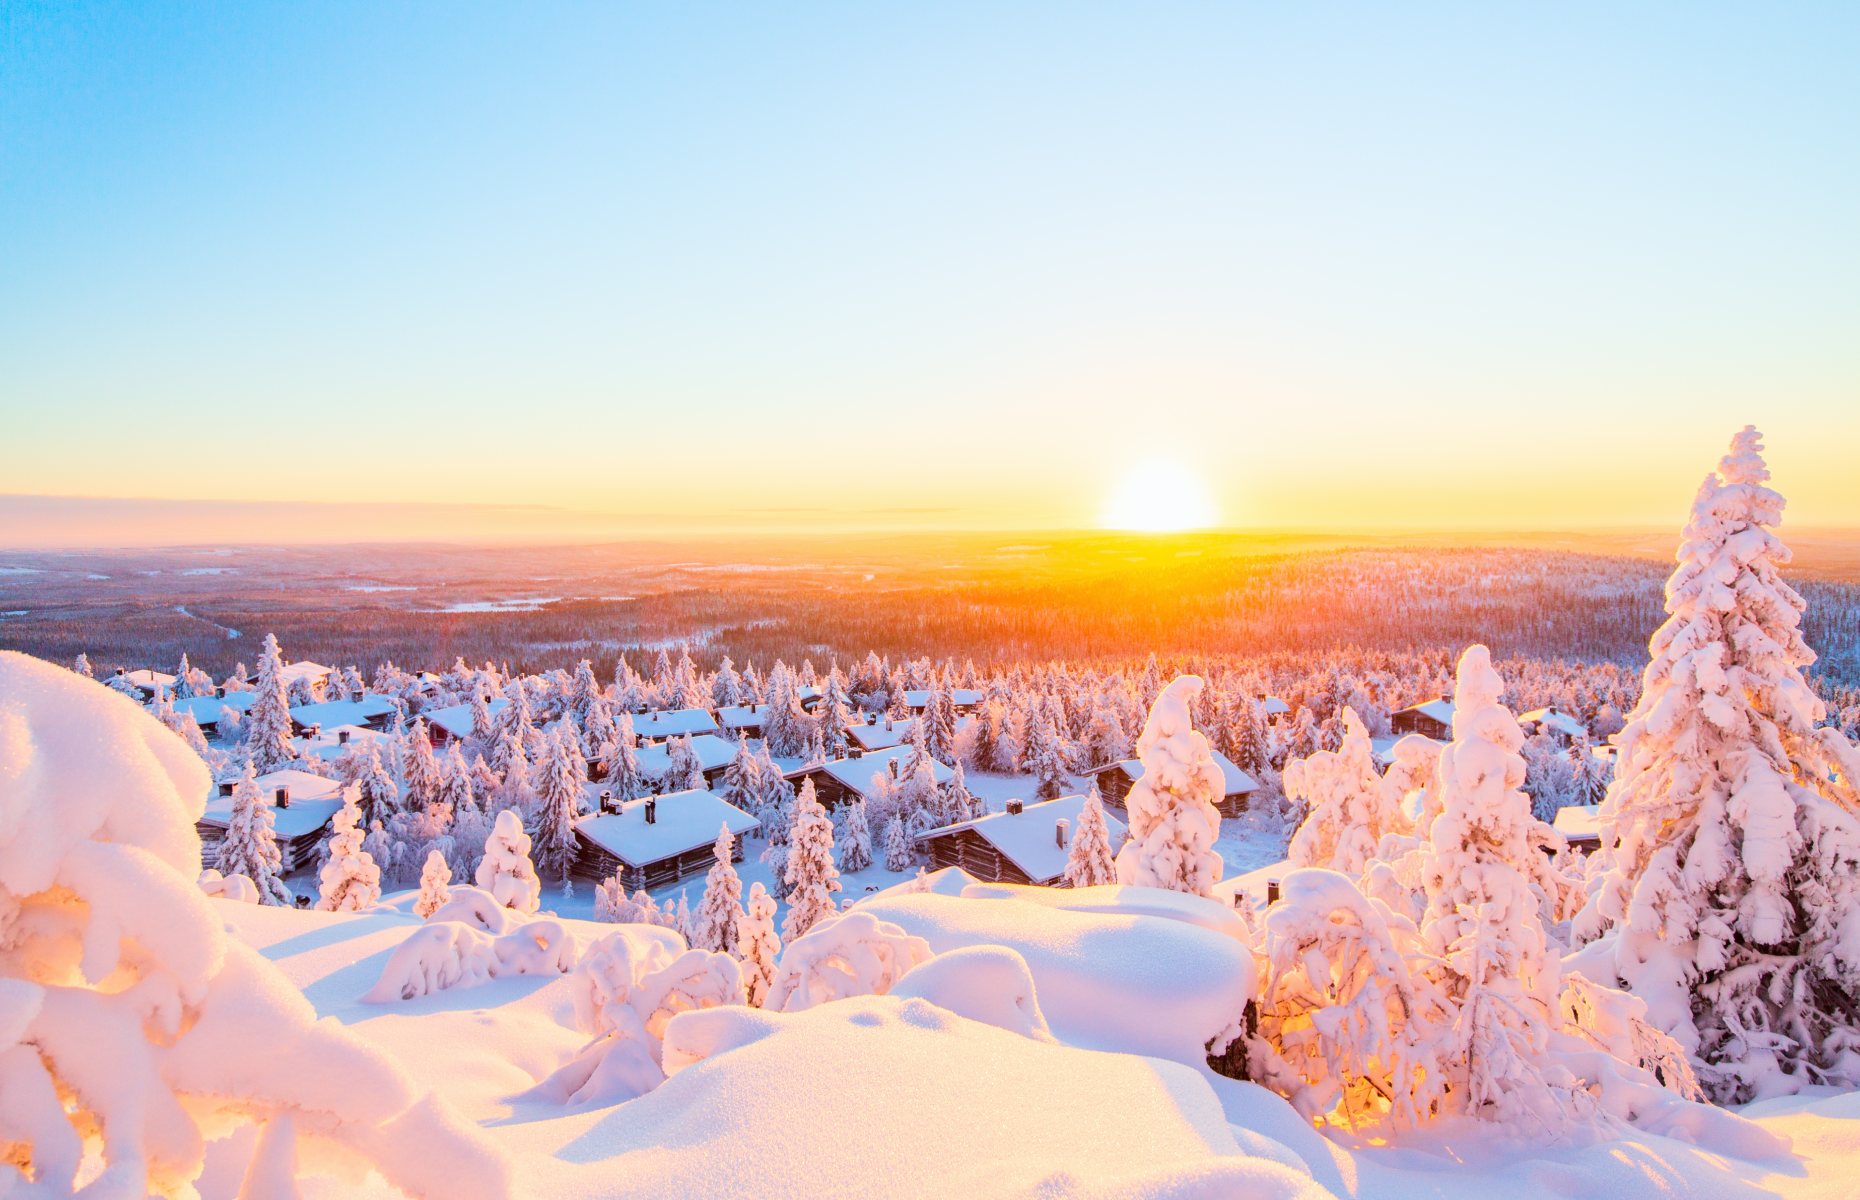 Sunset in Lapland, Finland (Image: BlueOrange Studio/Shutterstock)